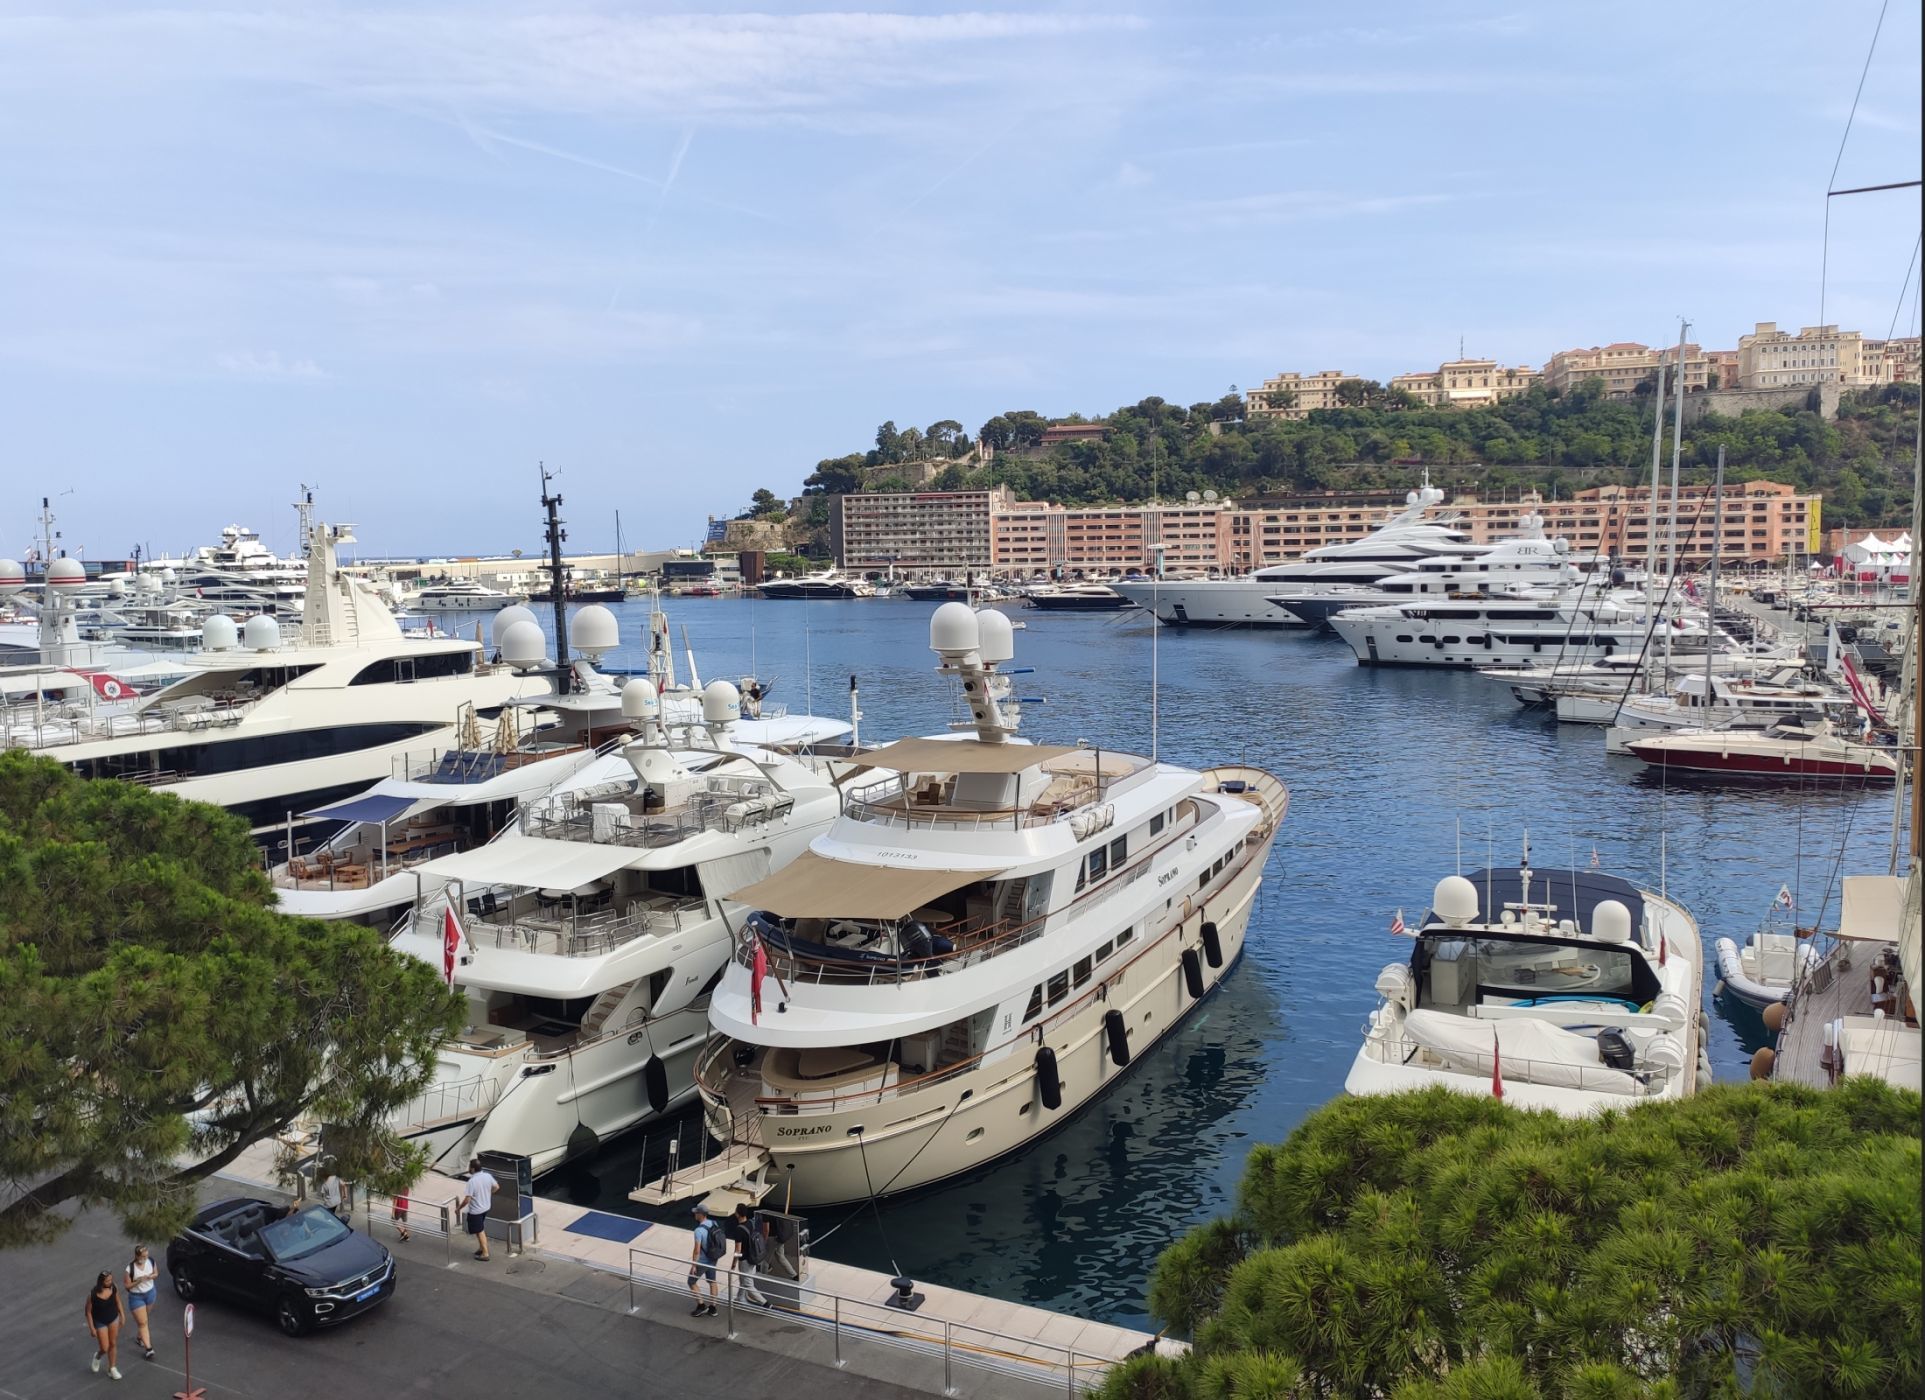 Hotel Miramar Monaco - View